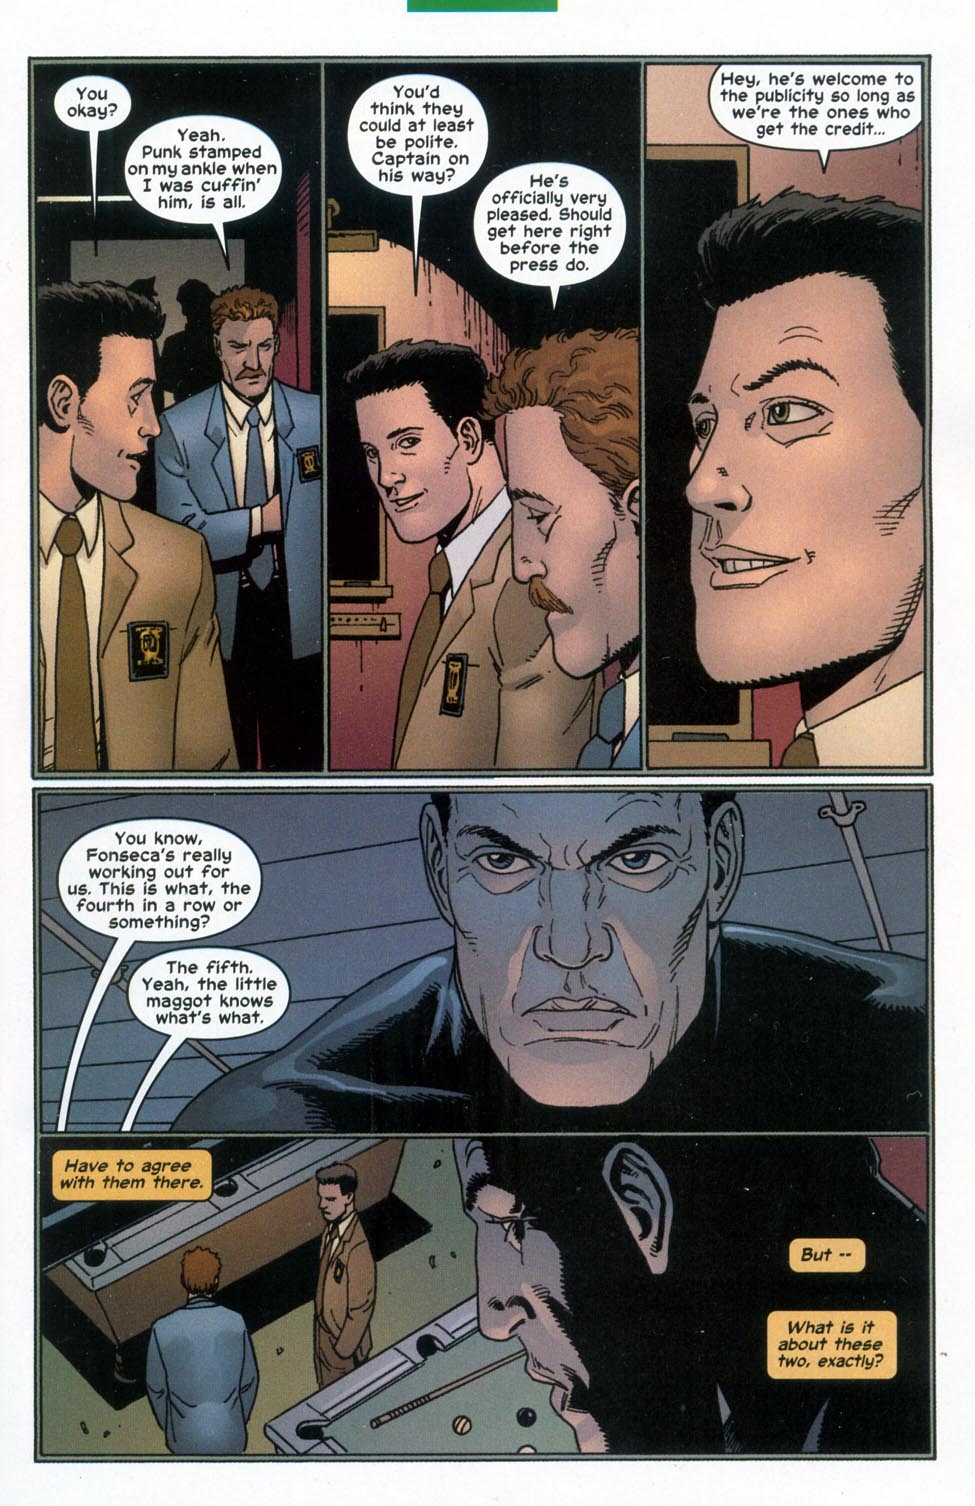 The Punisher (2001) Issue #20 - Brotherhood #01 #20 - English 4